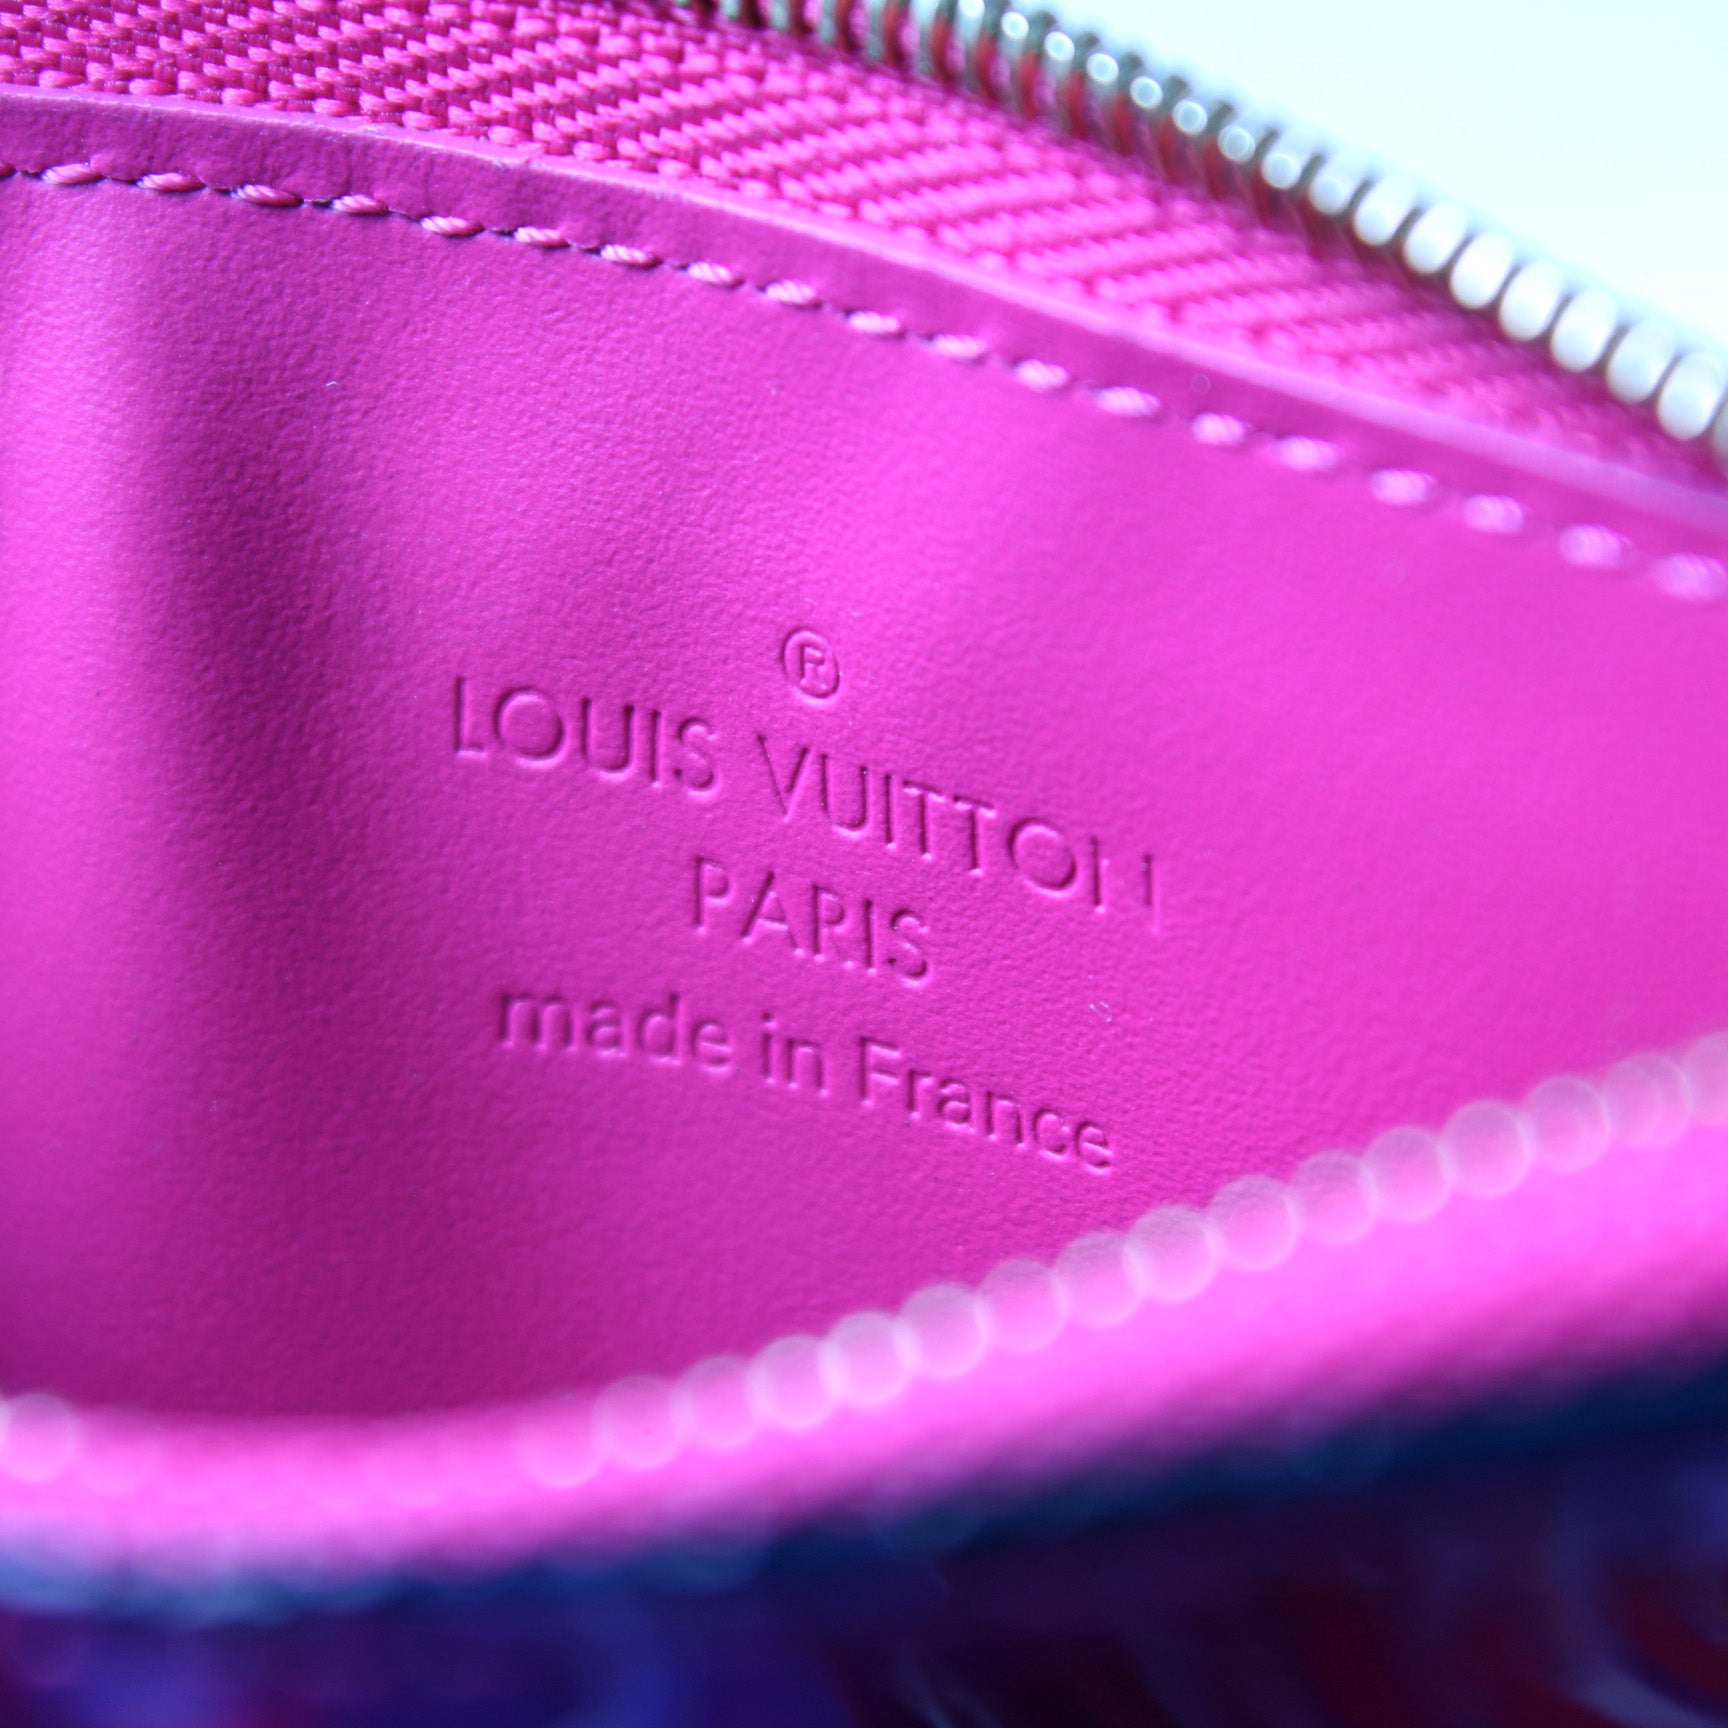 Key Pouch Valentine Vernis – Keeks Designer Handbags